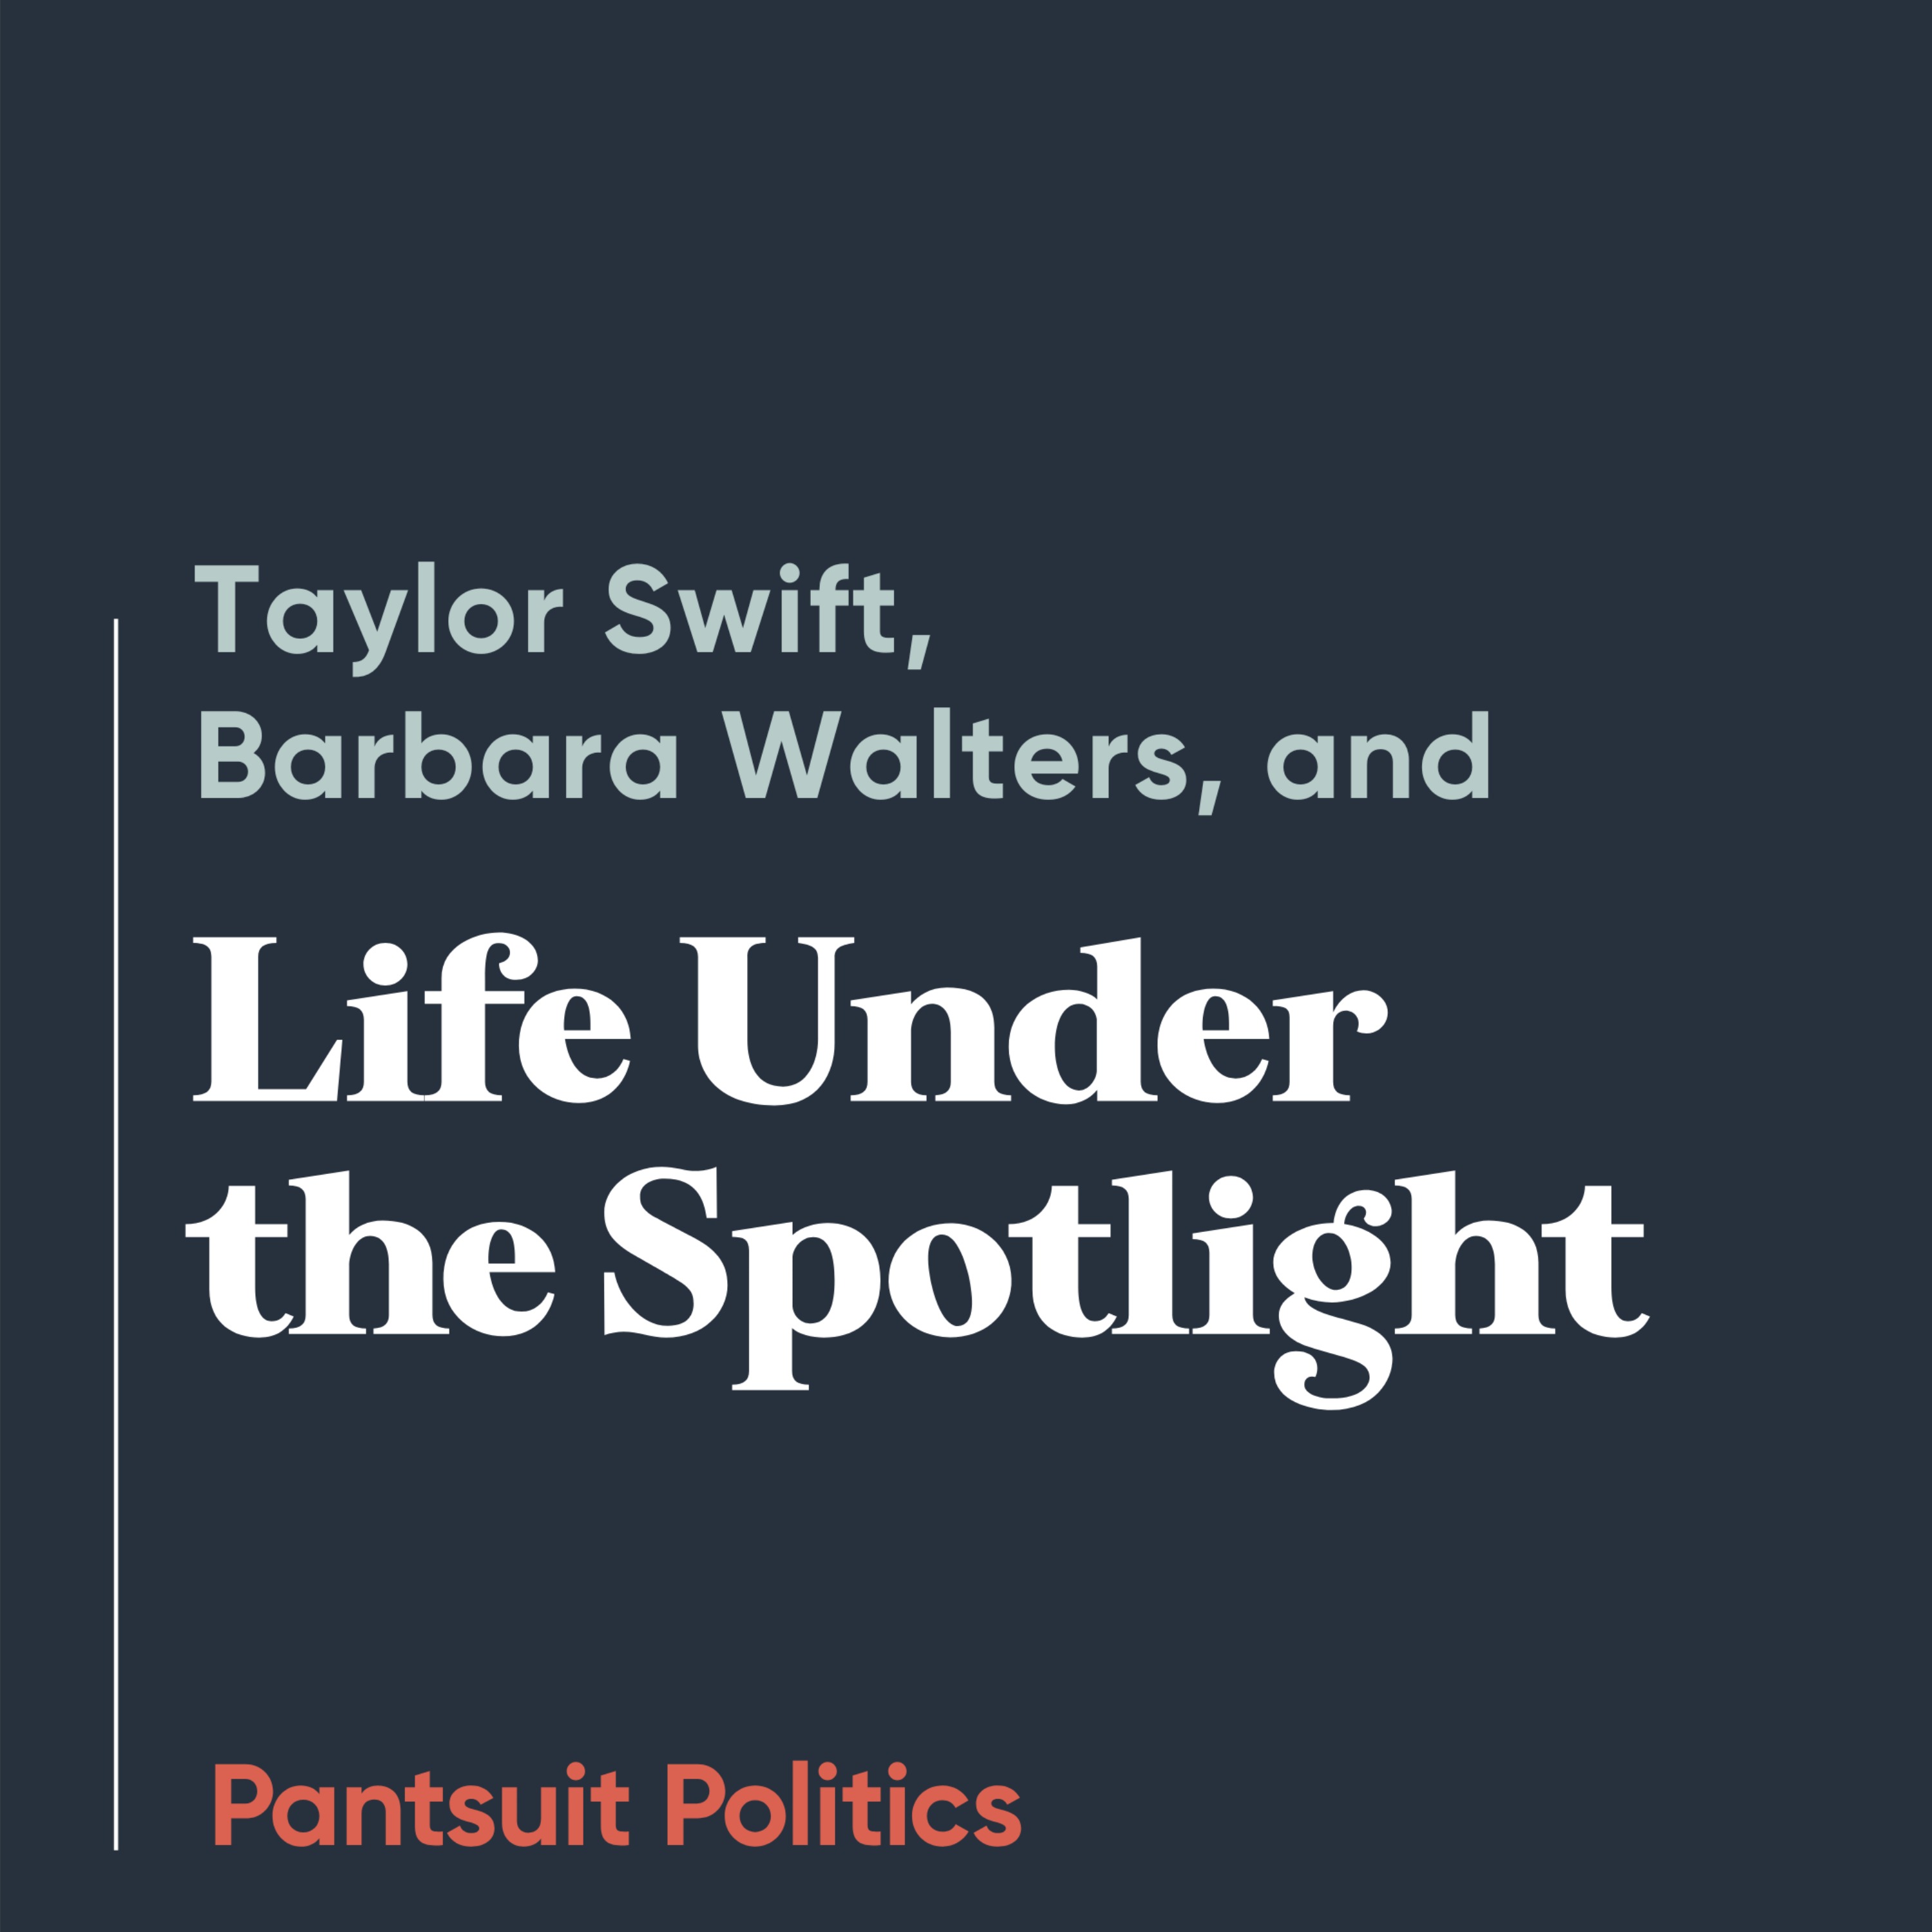 Taylor Swift, Barbara Walters, and Life Under the Spotlight